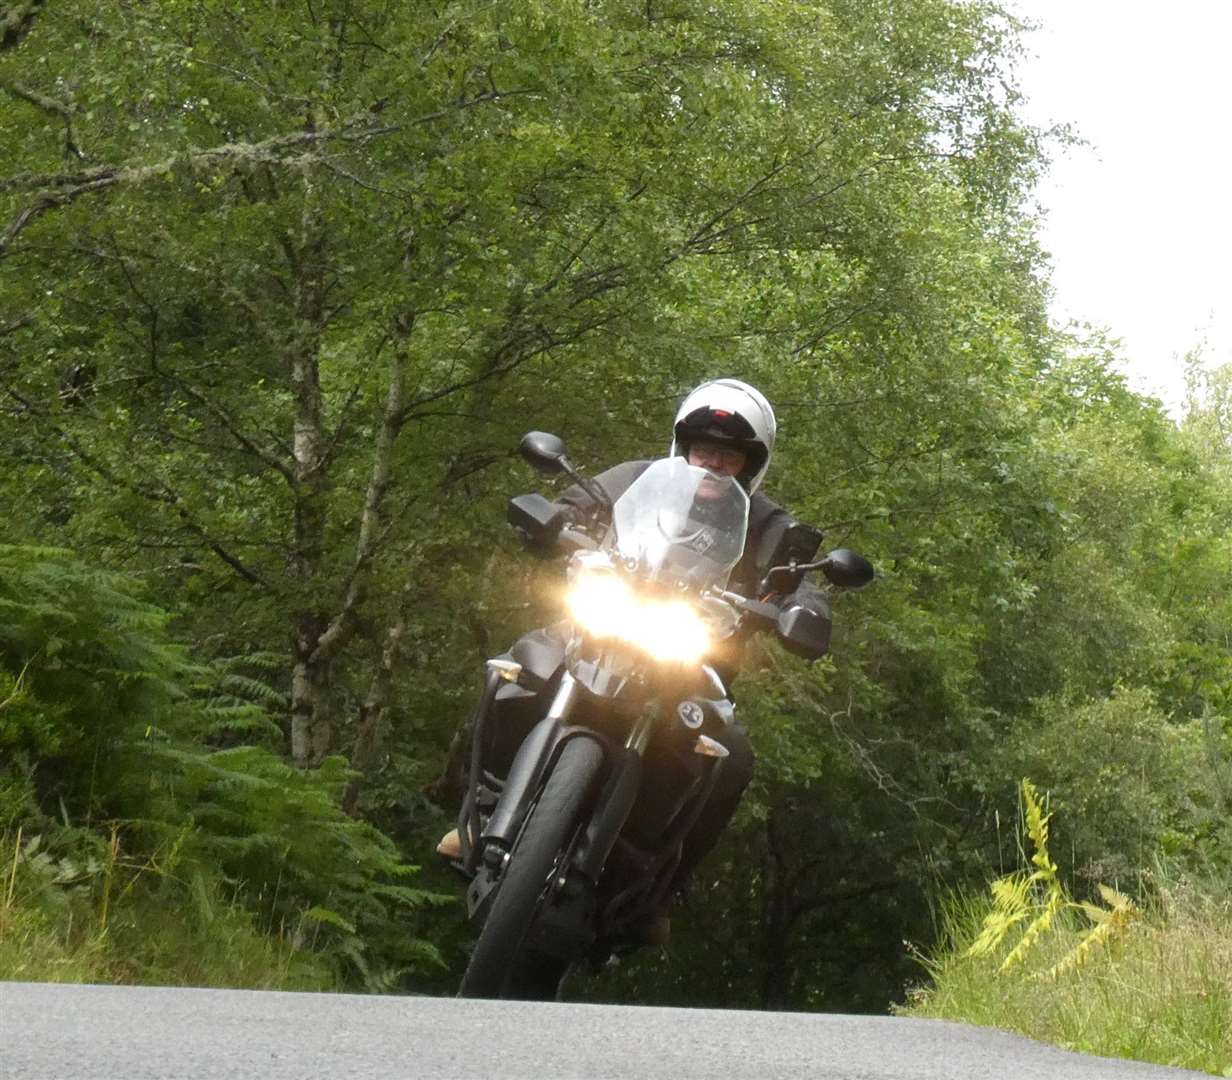 A motorcyclist on the open road during the Arnott Moffat Memorial Run 2022.